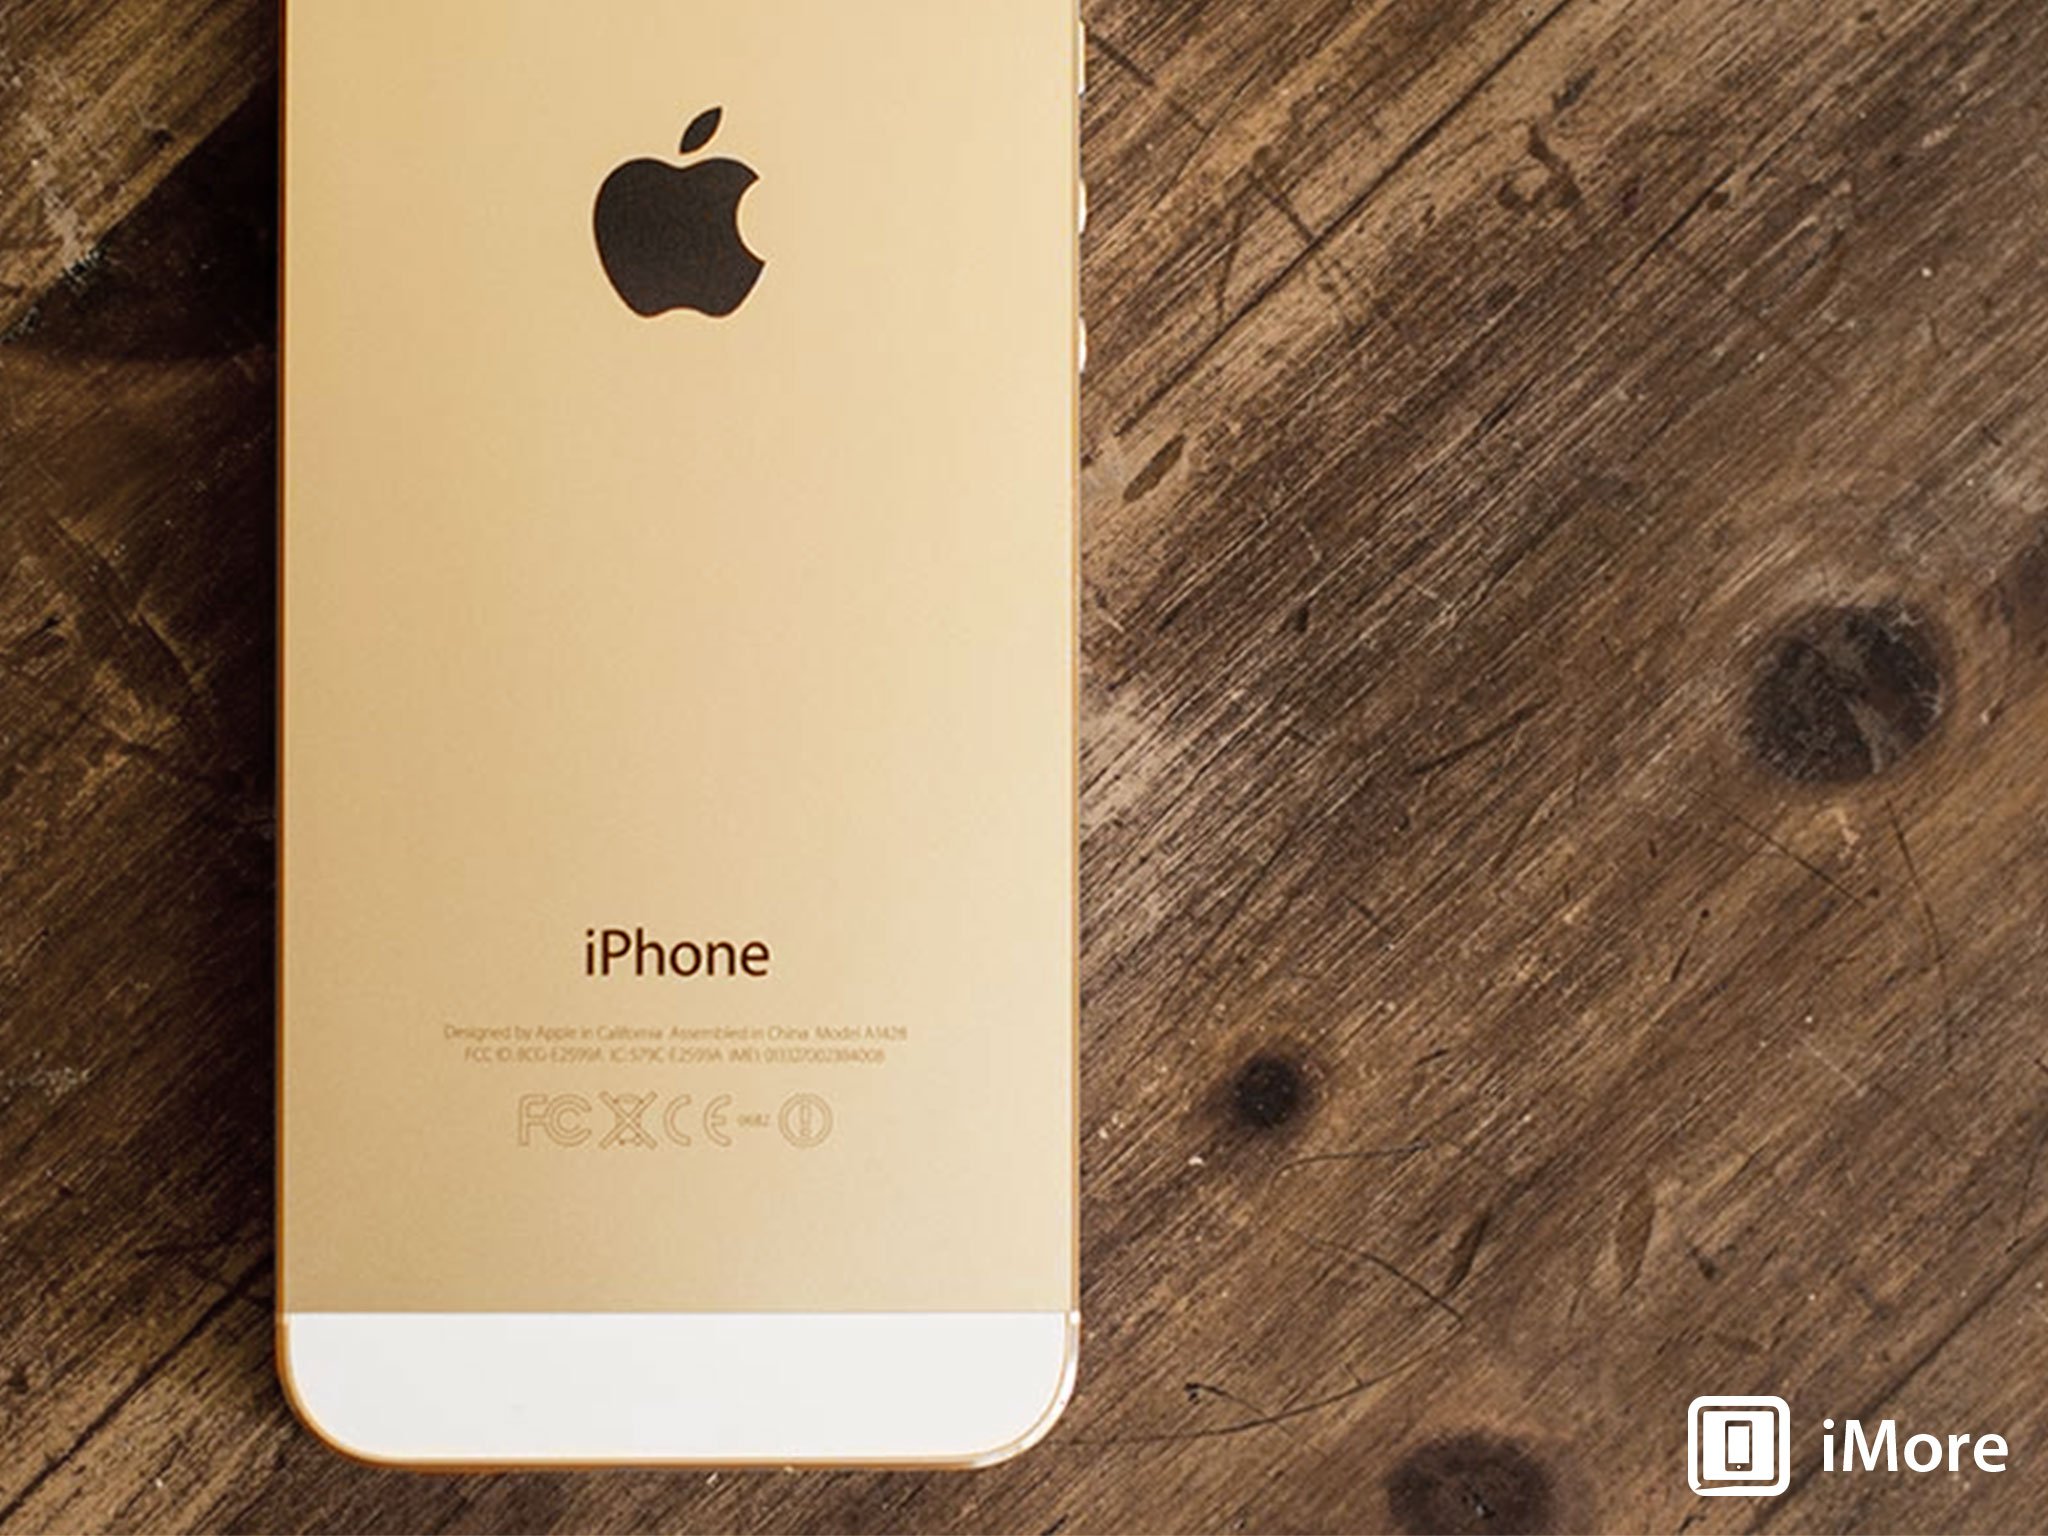 Imagining iPhone 5s and iPhone 5c: Branding